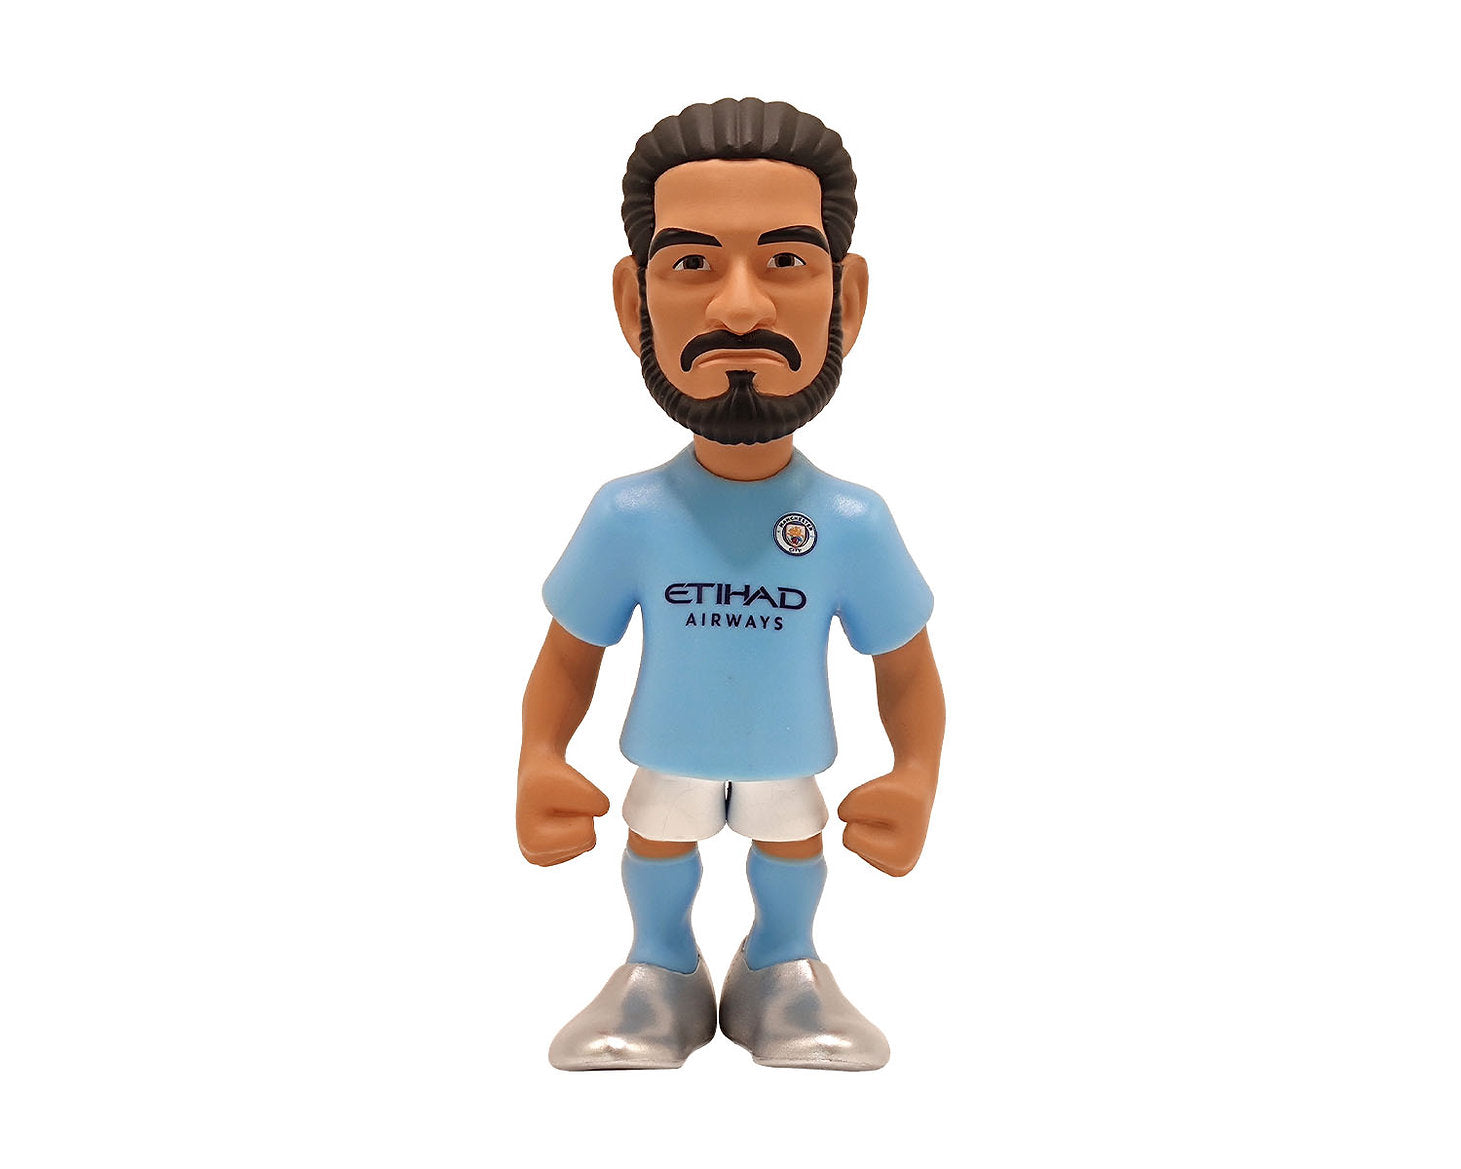 Minix - Football Stars #135 - Manchester City - Ilkay Gündogan "8" - Figurine 12cm